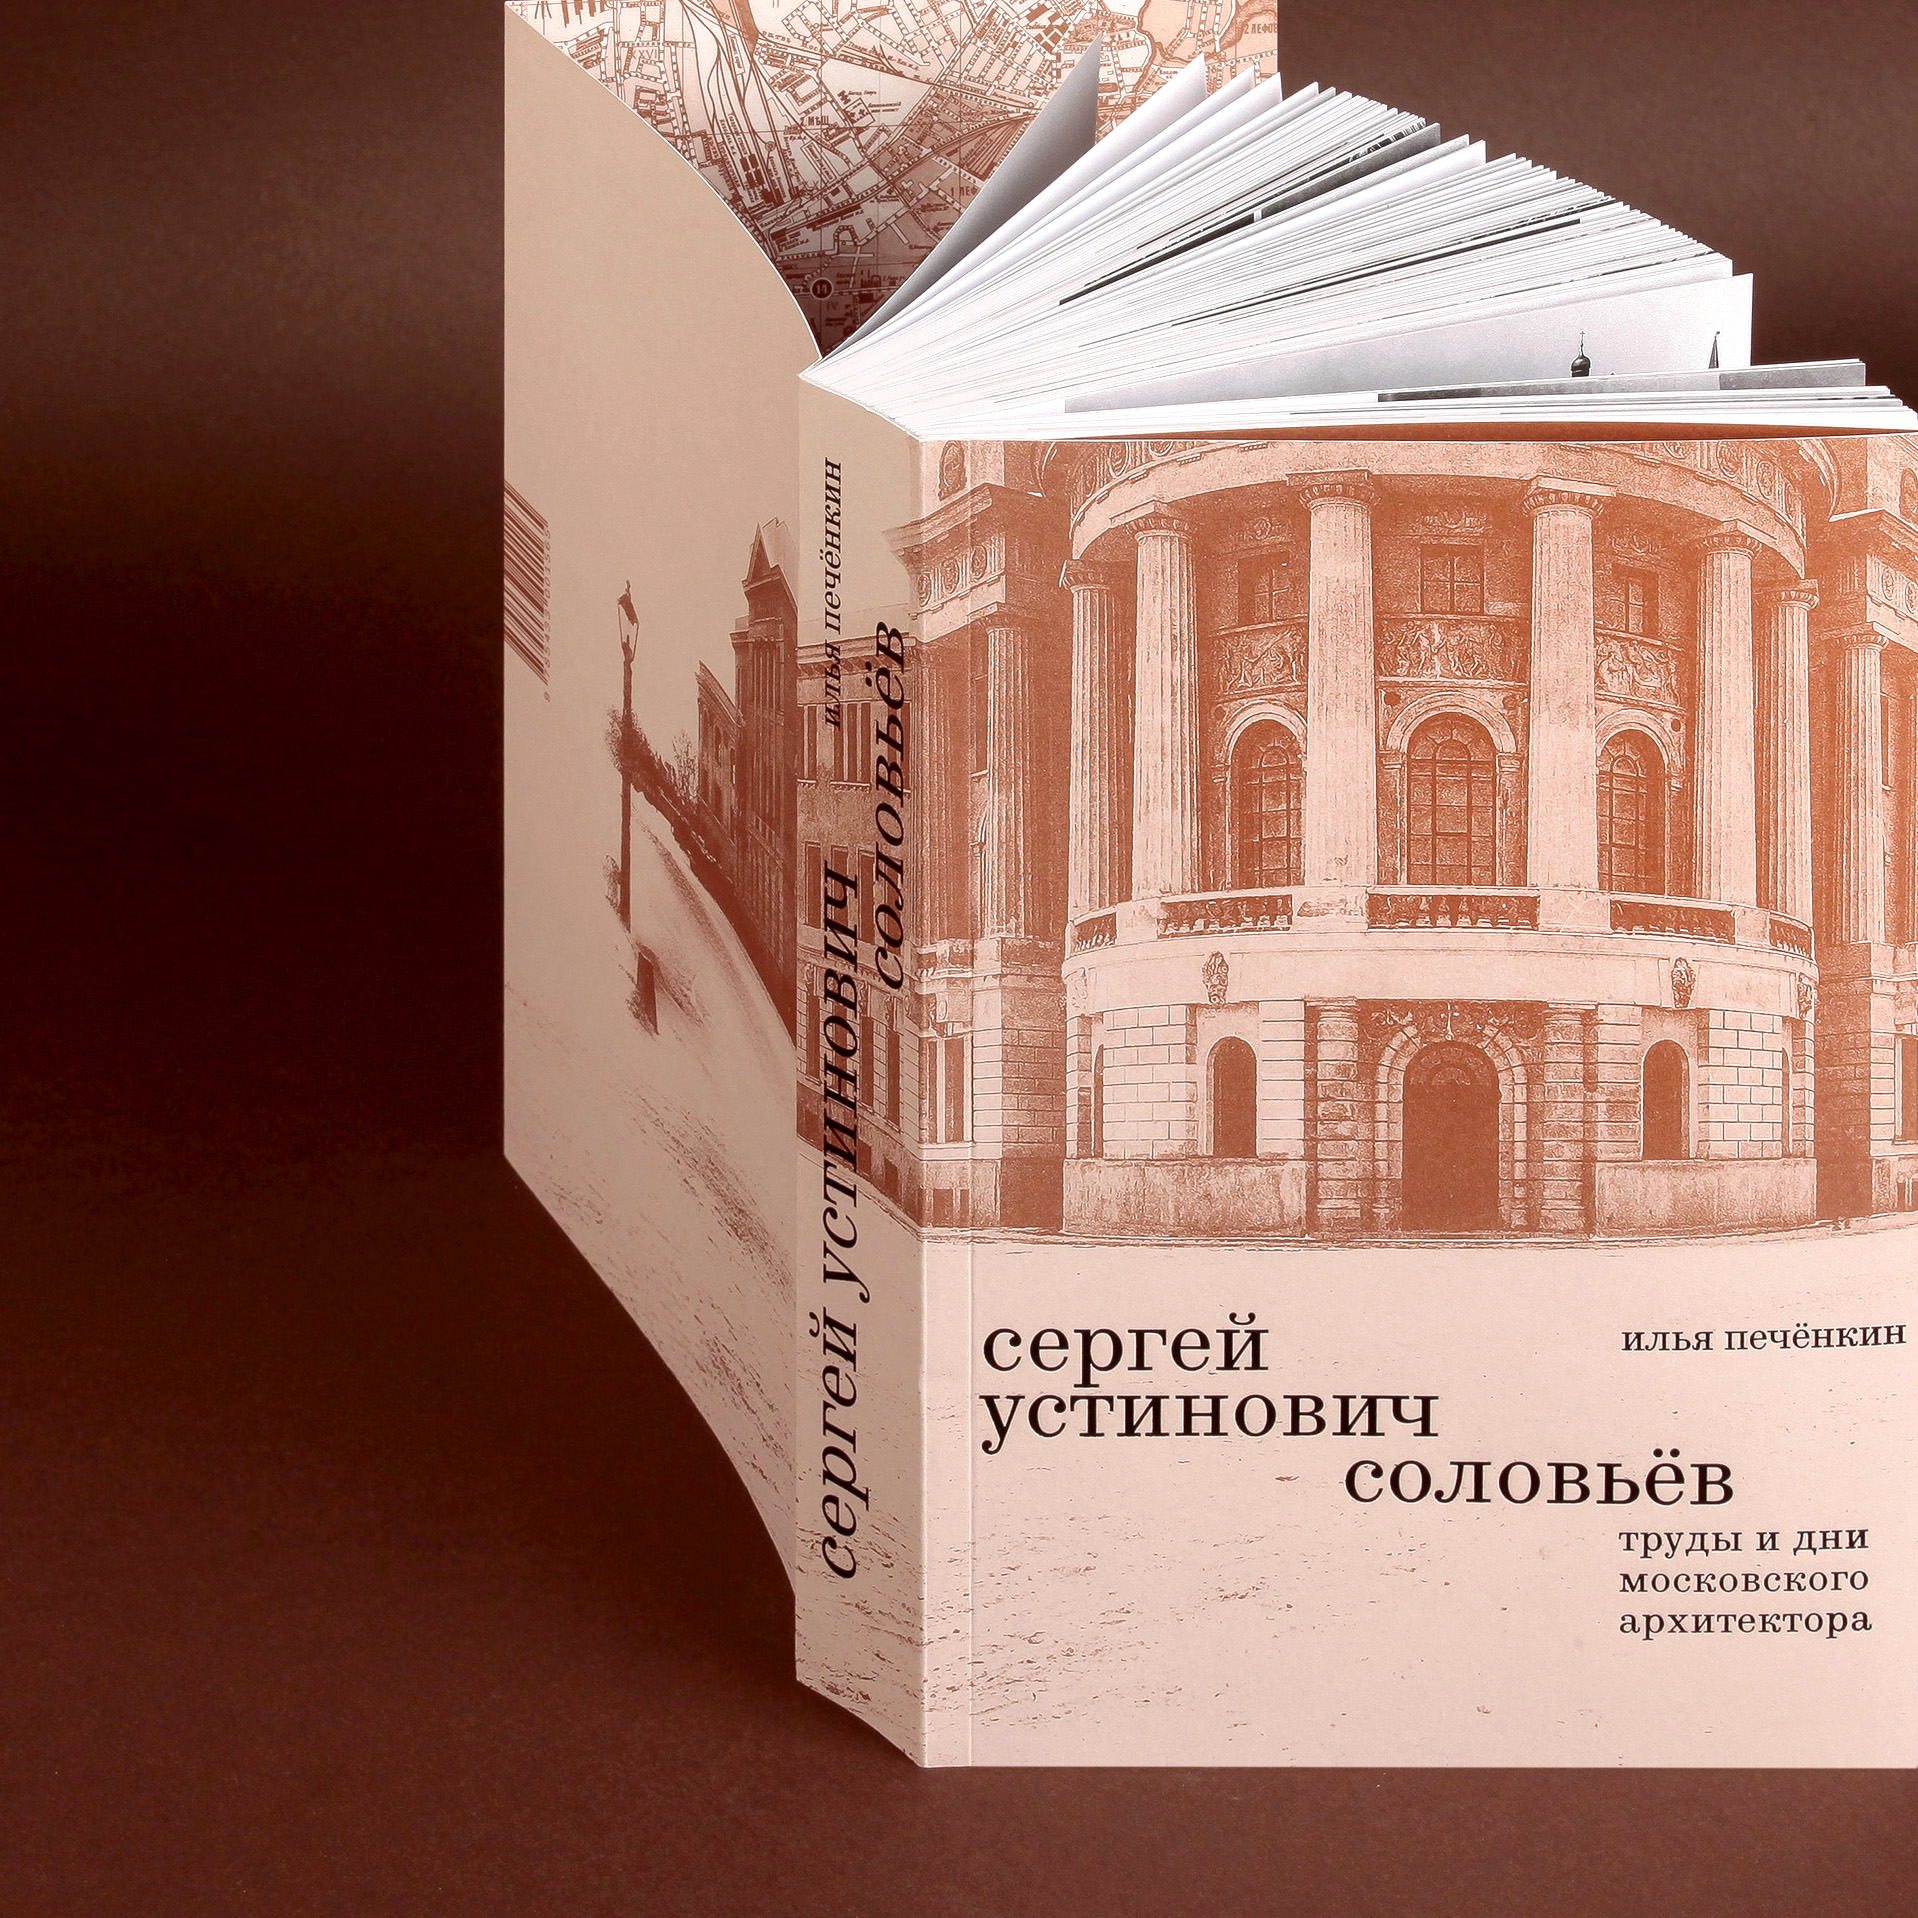 Architecture book. Книга архитектура московские коробки. Архитектор мистика.